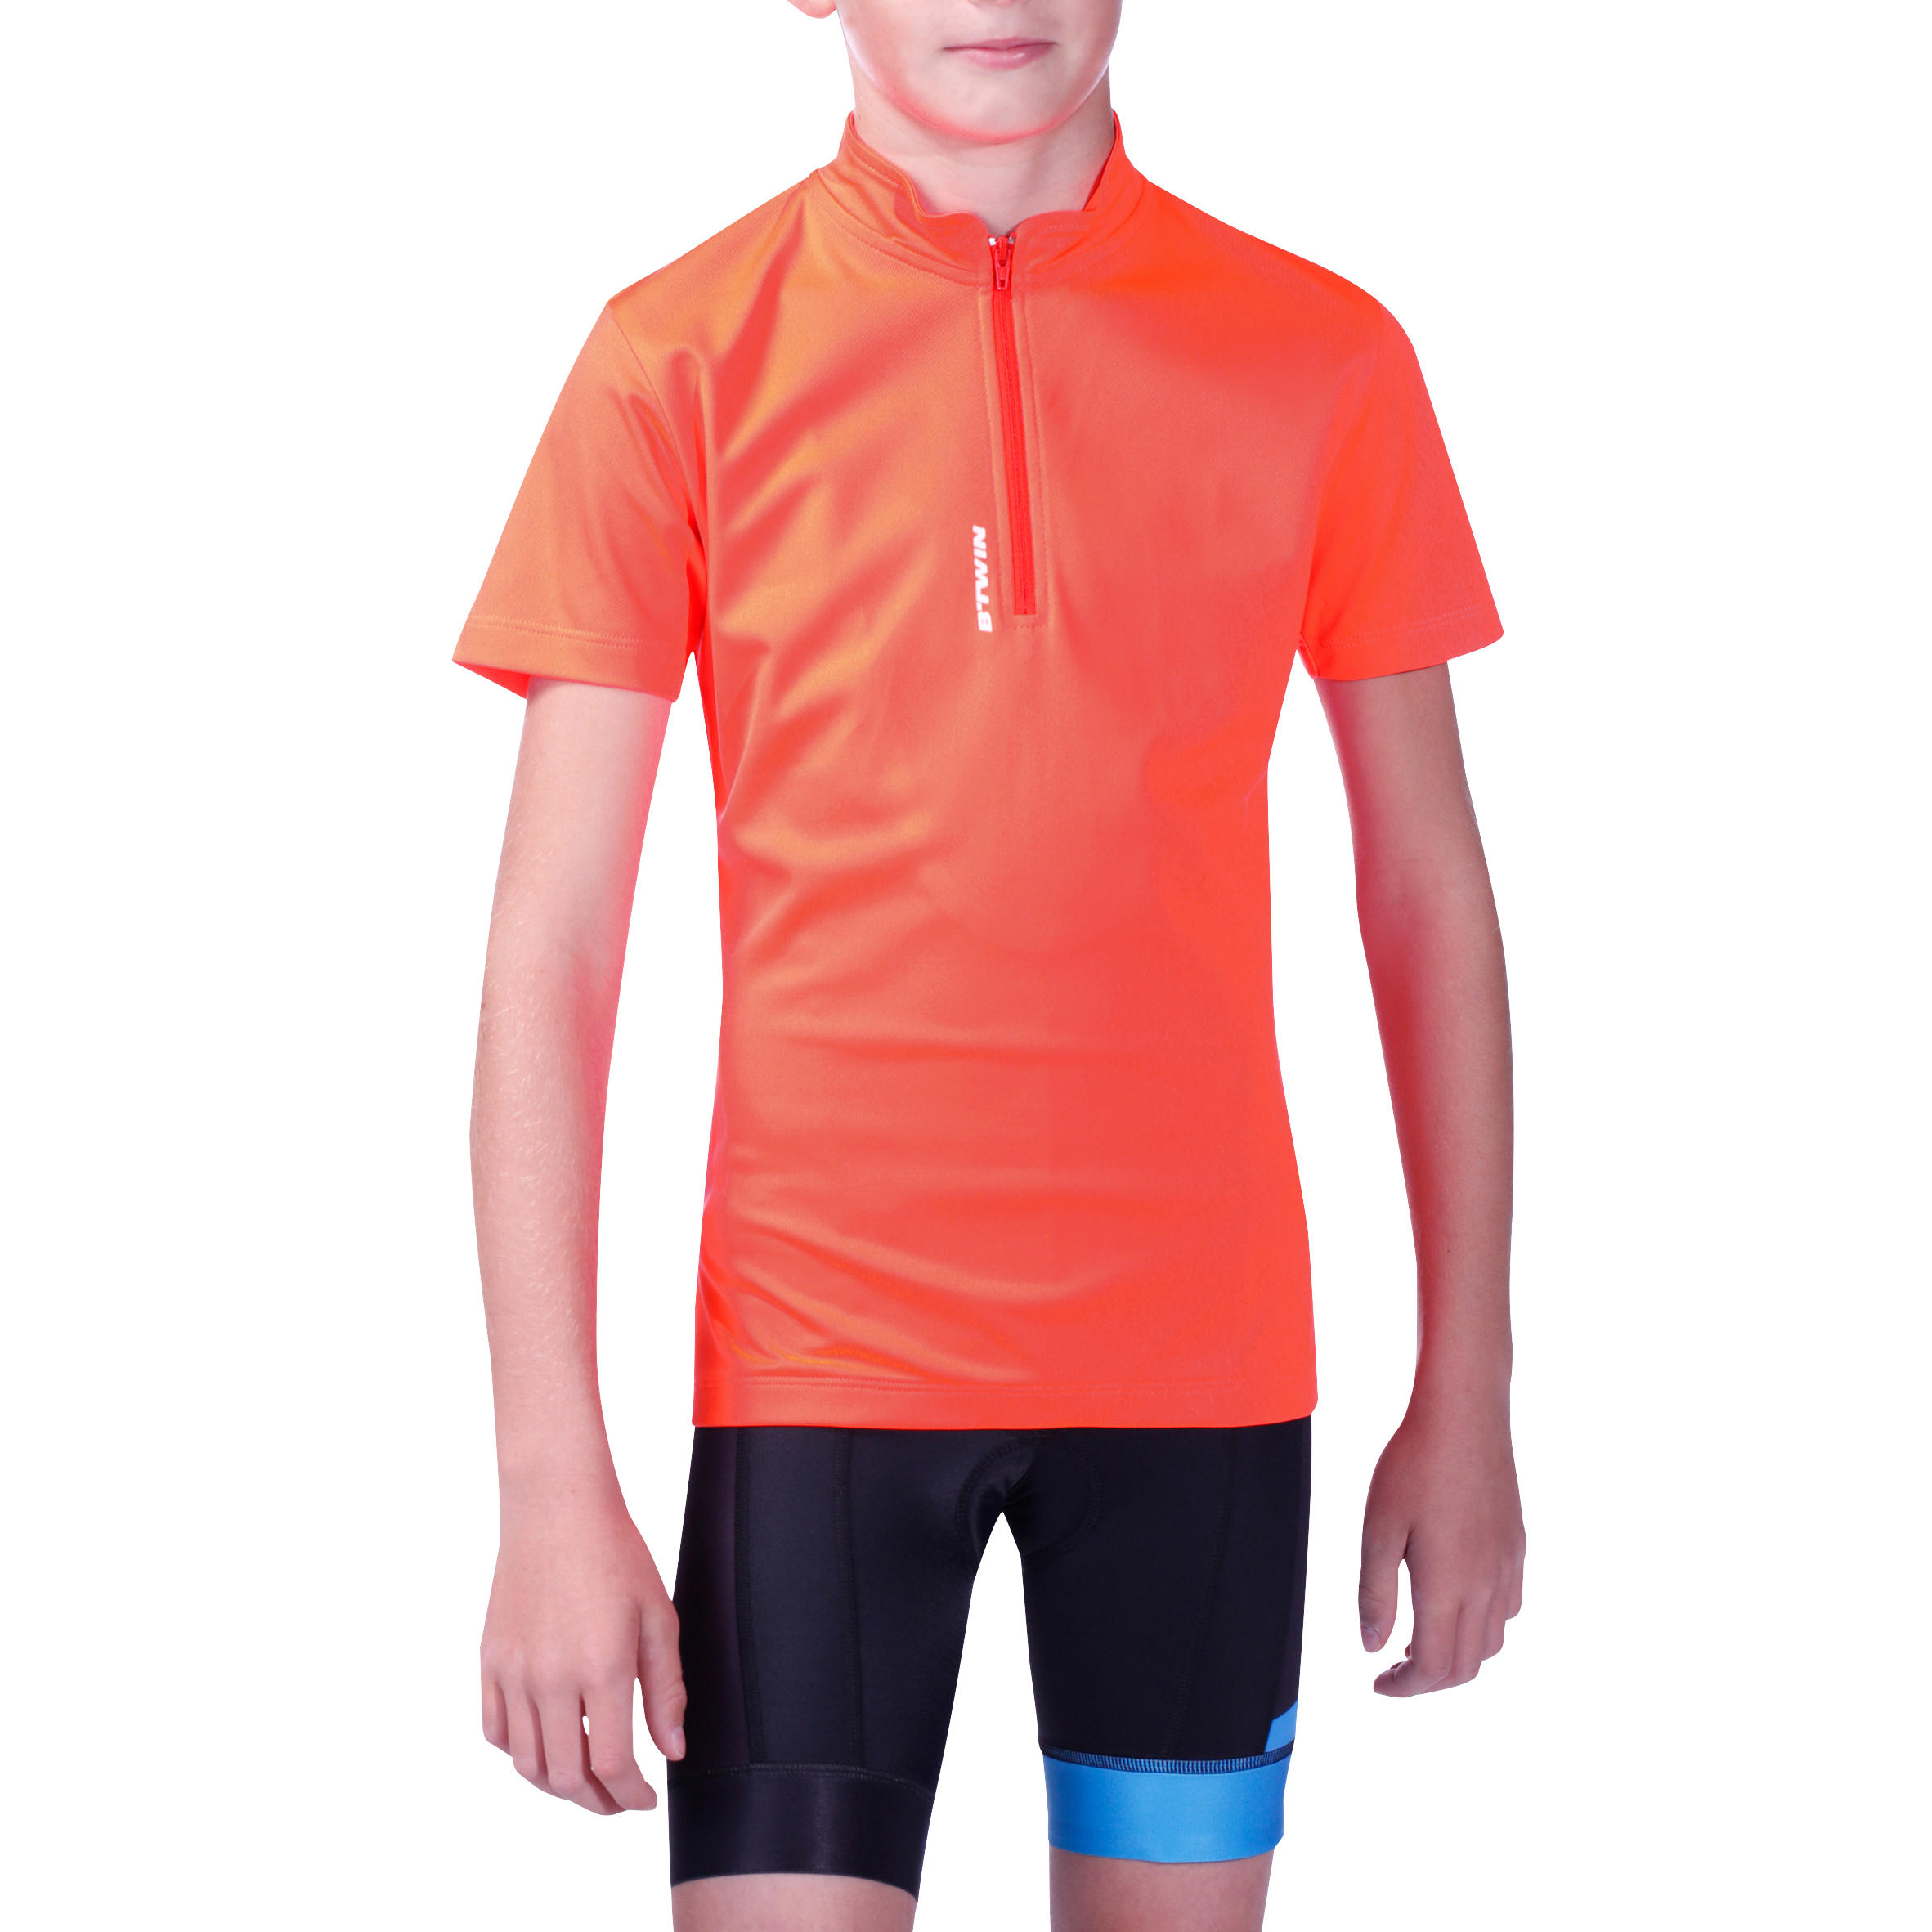 decathlon cycling jersey